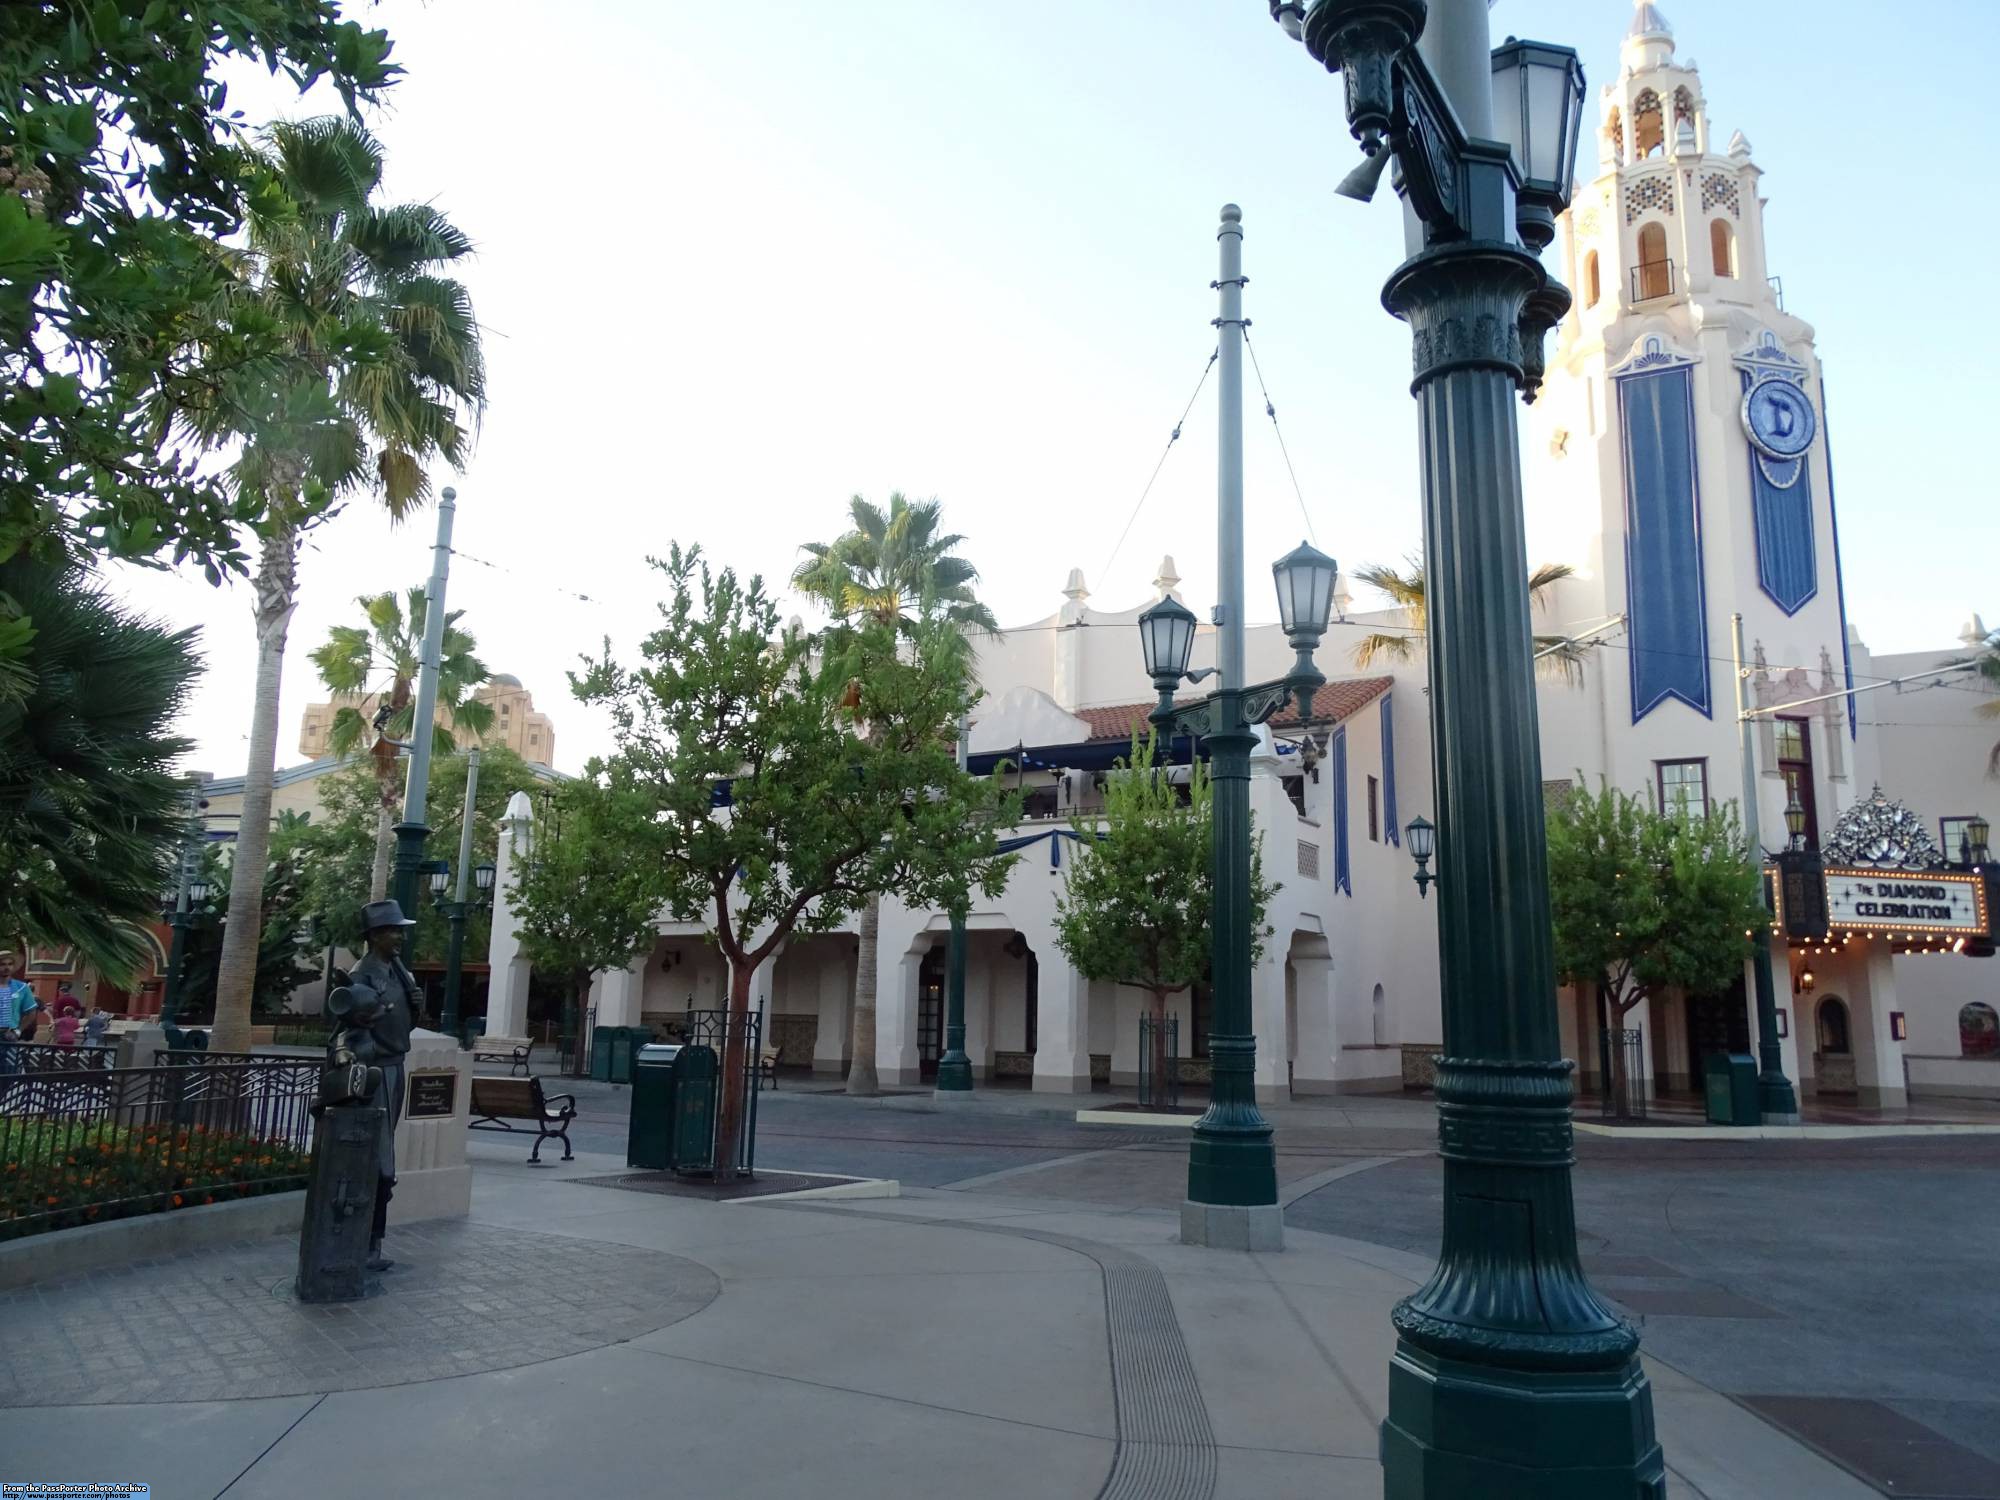 Learn from PassPorter Author Cheryl Pendry's most recent trip to Disneyland | PassPorter.com